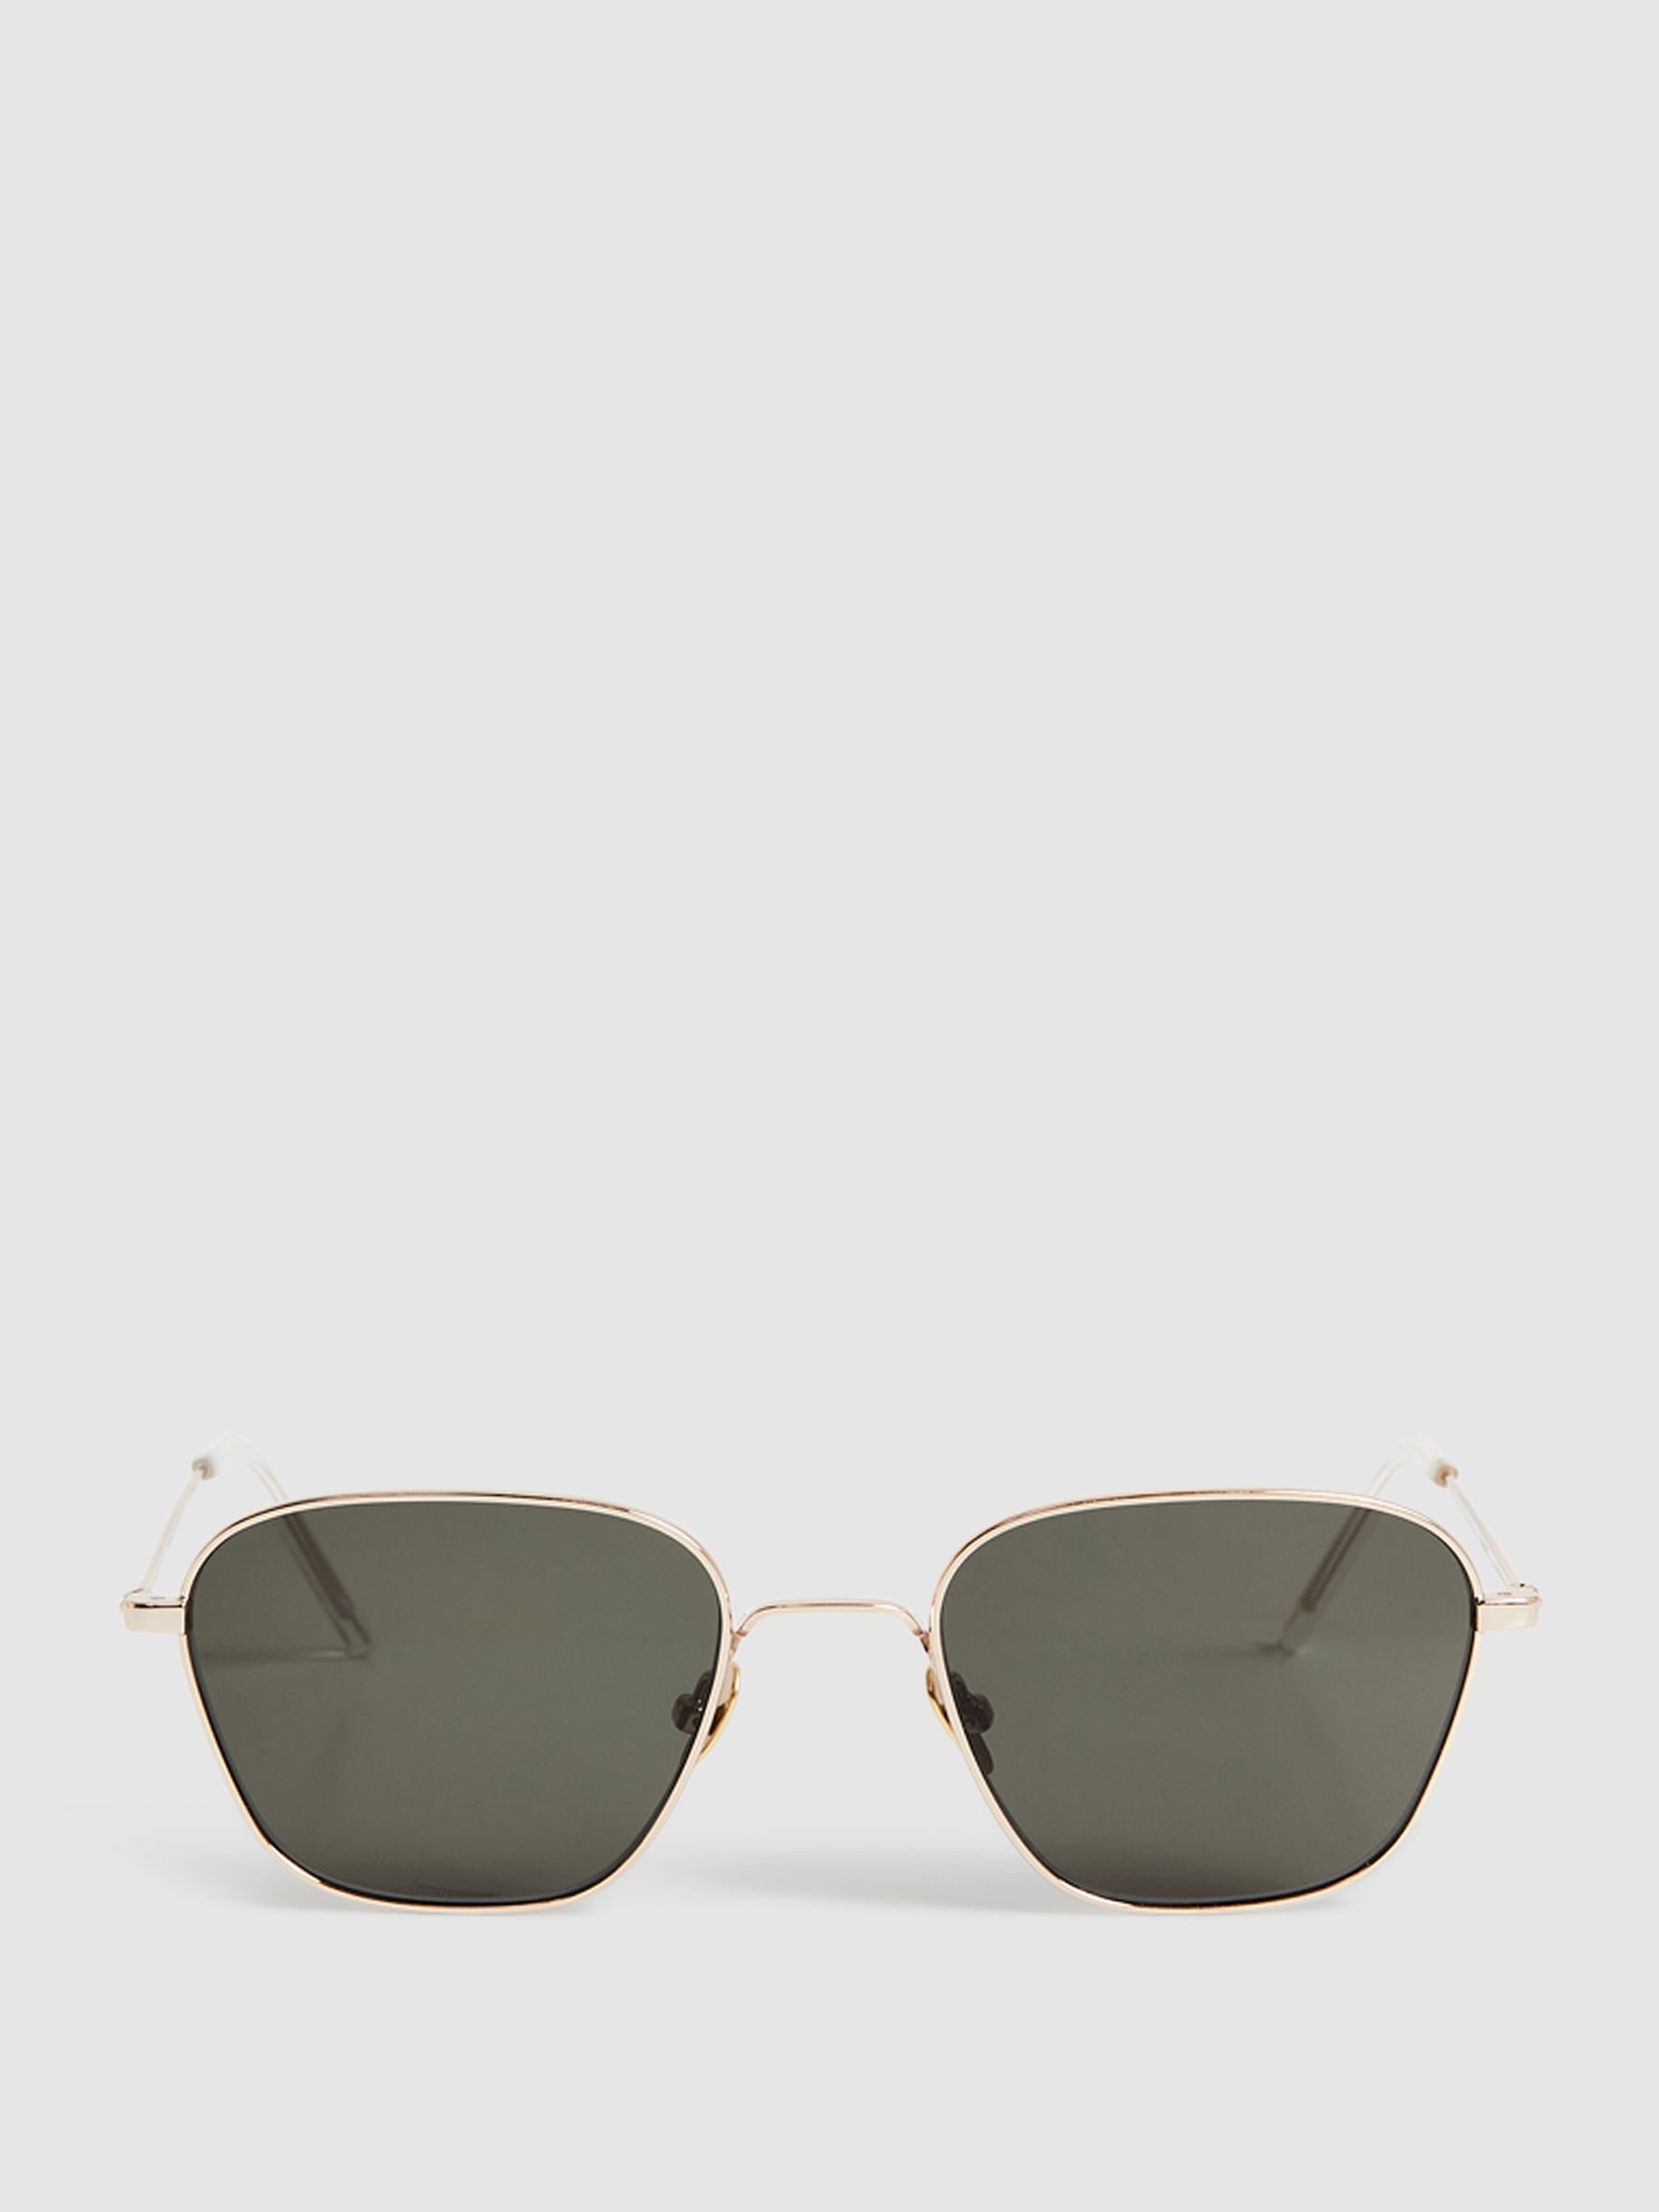 Monokel Eyewear Squared Sunglasses in Gold - REISS